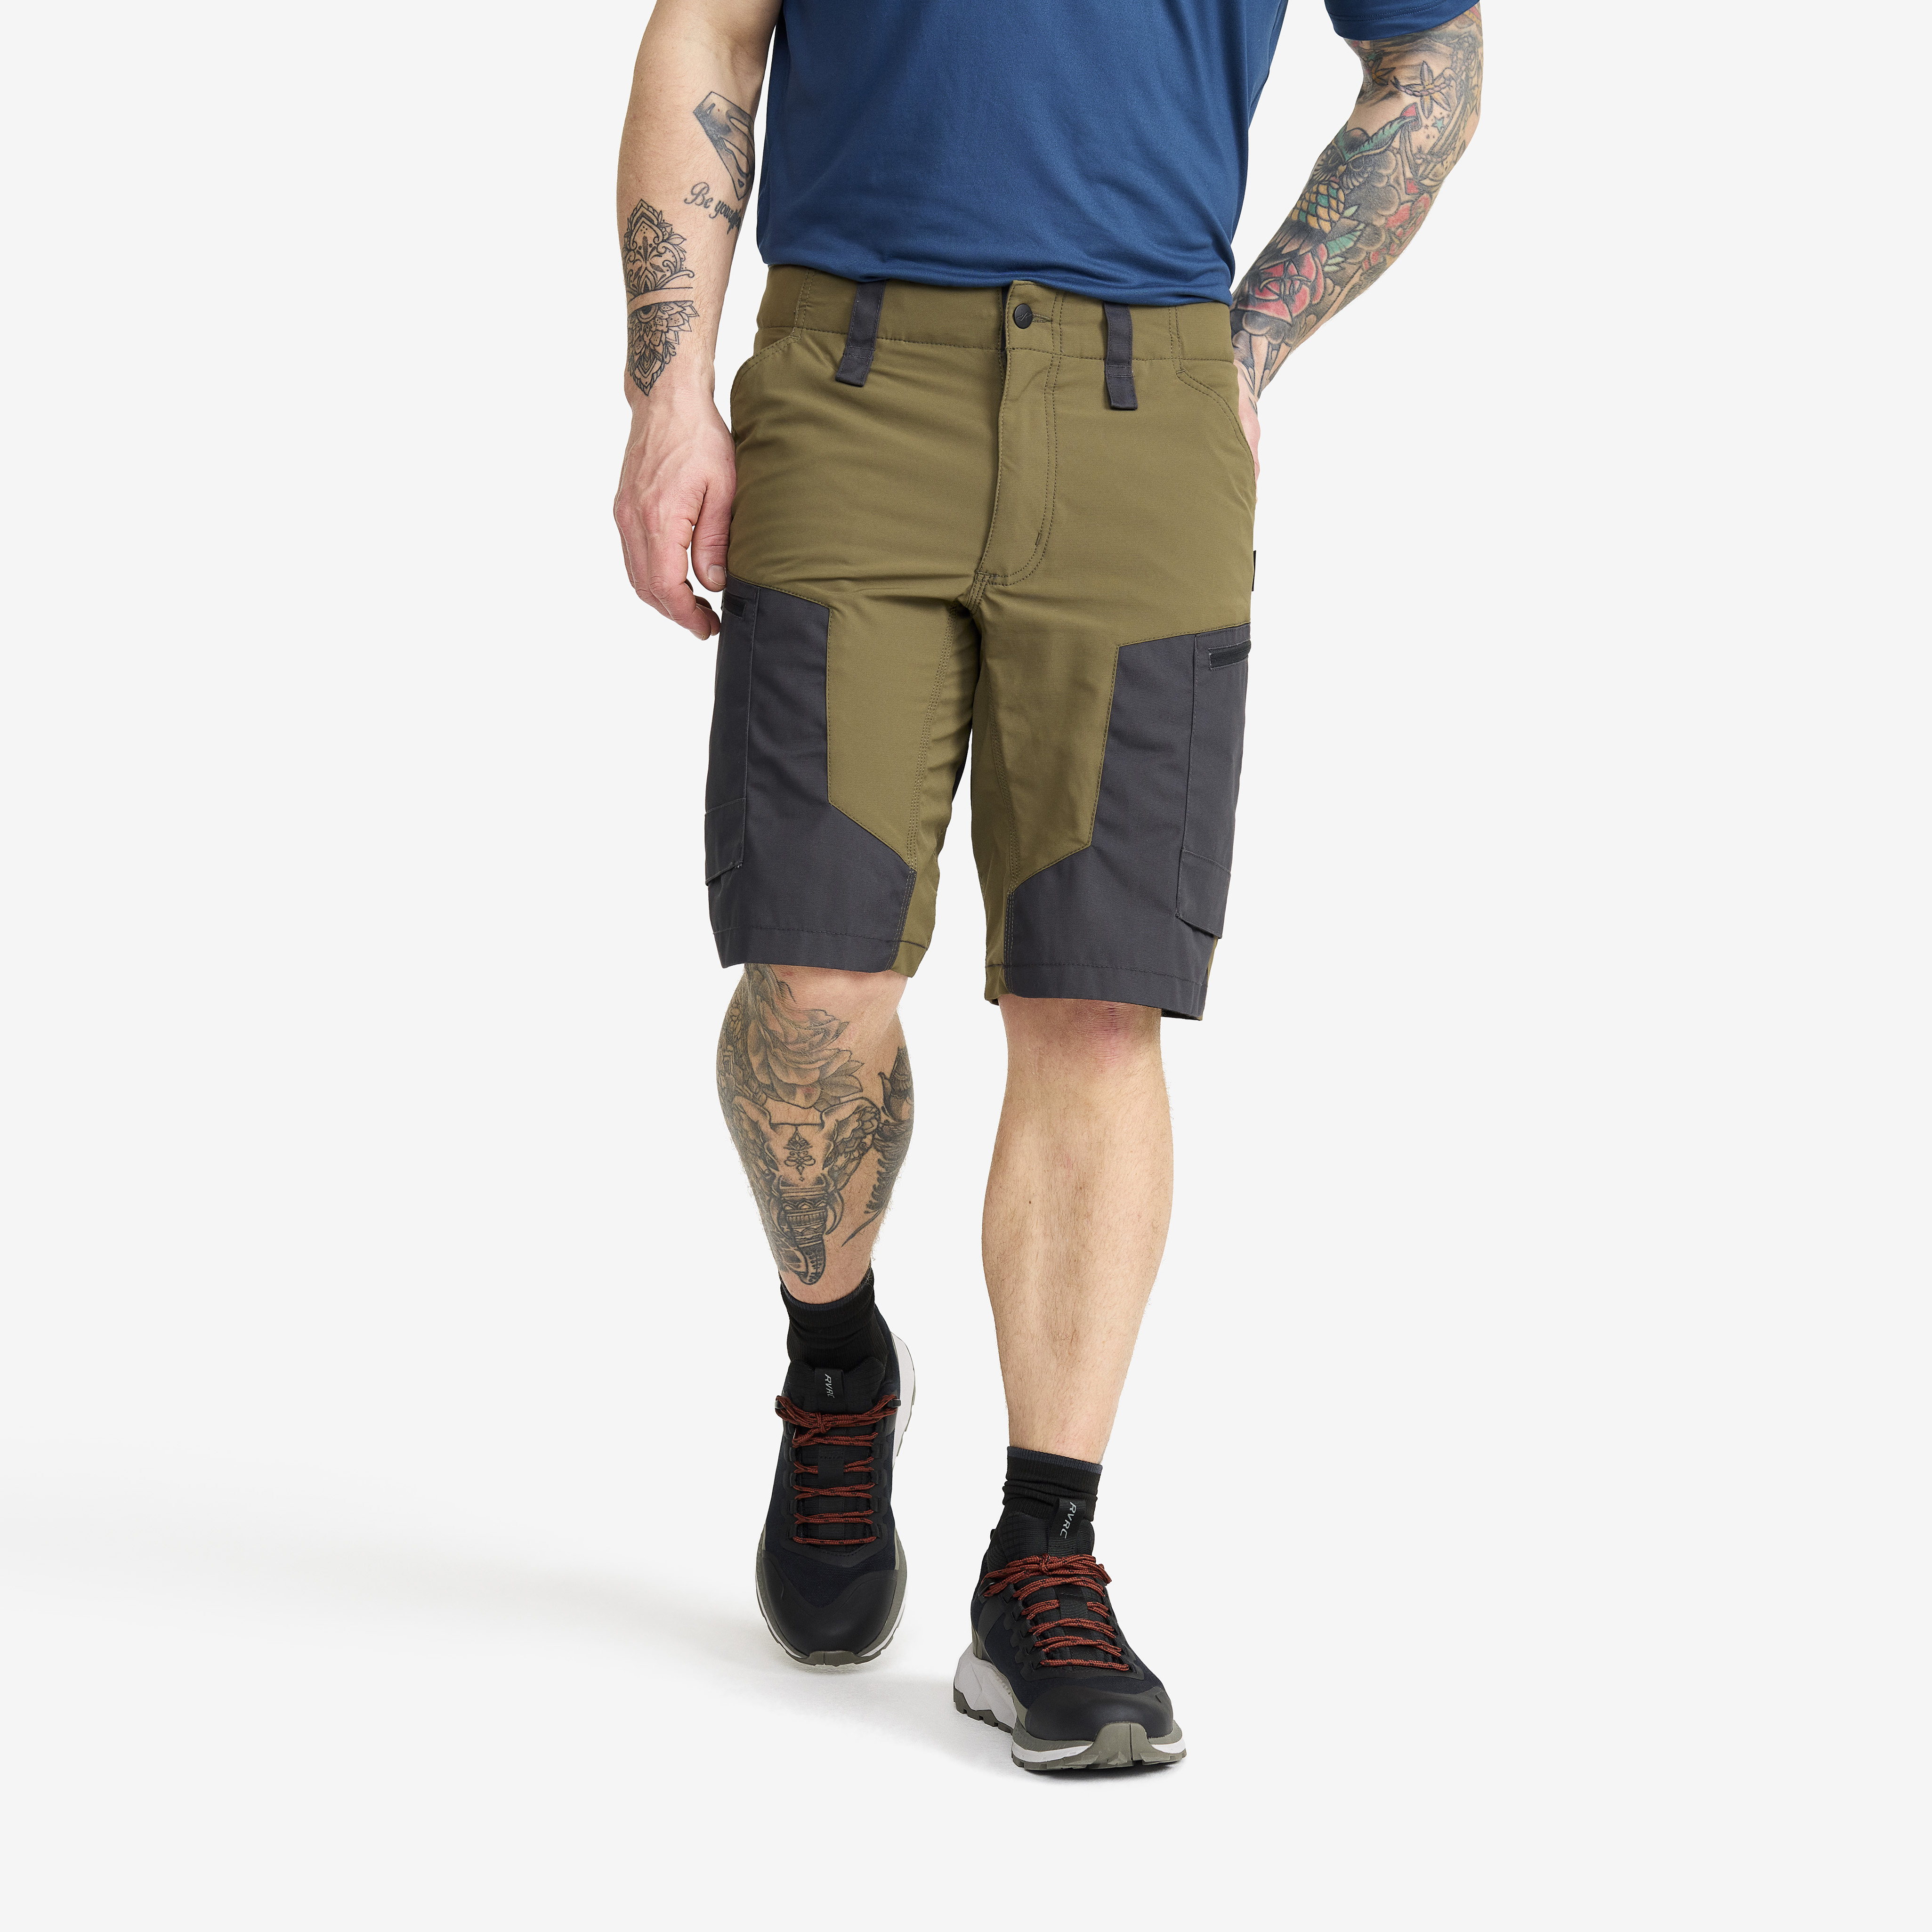 RVRC GP shorts for men in green